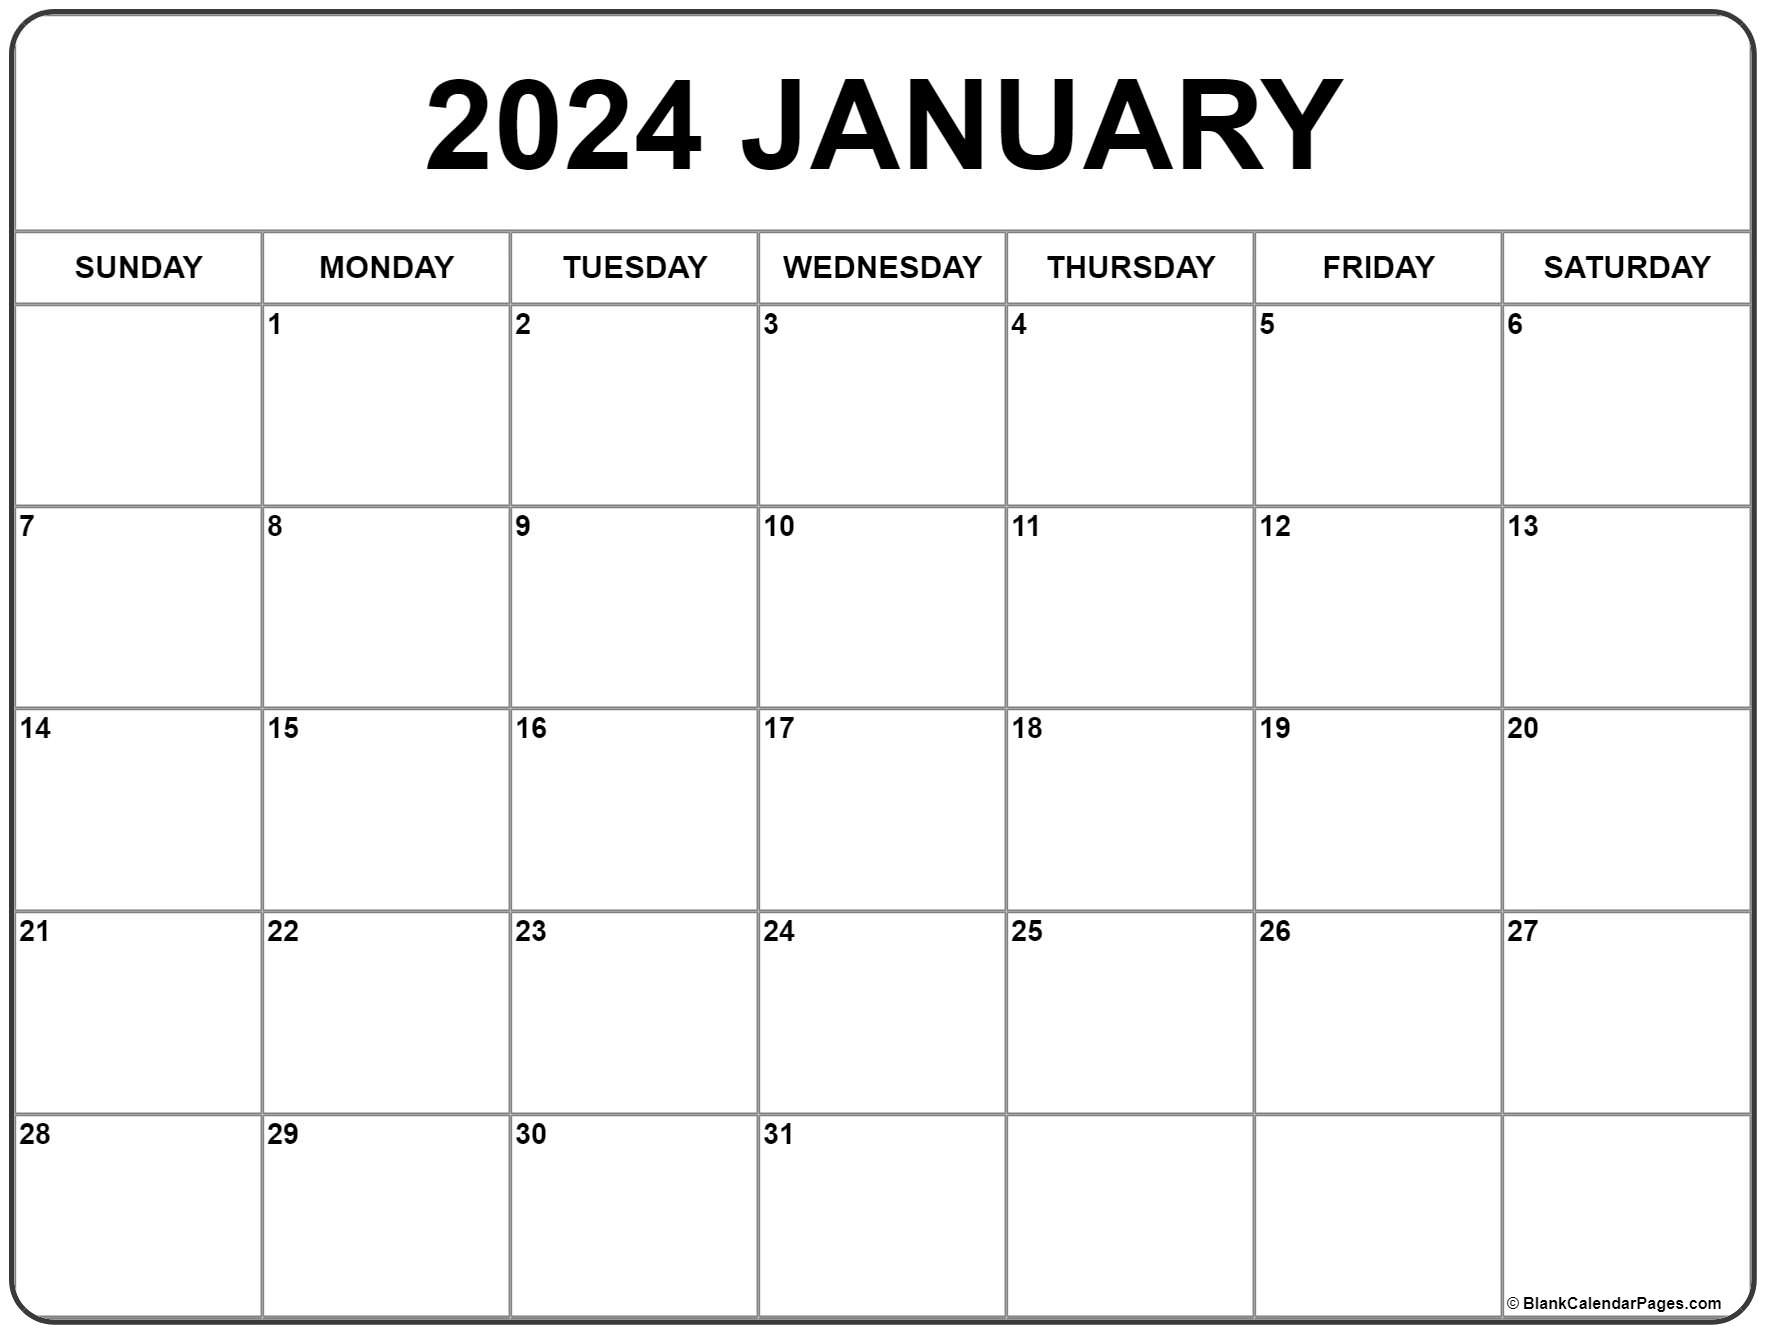 January 2024 Calendar | Free Printable Calendar for 2024 January Calendar Free Printable